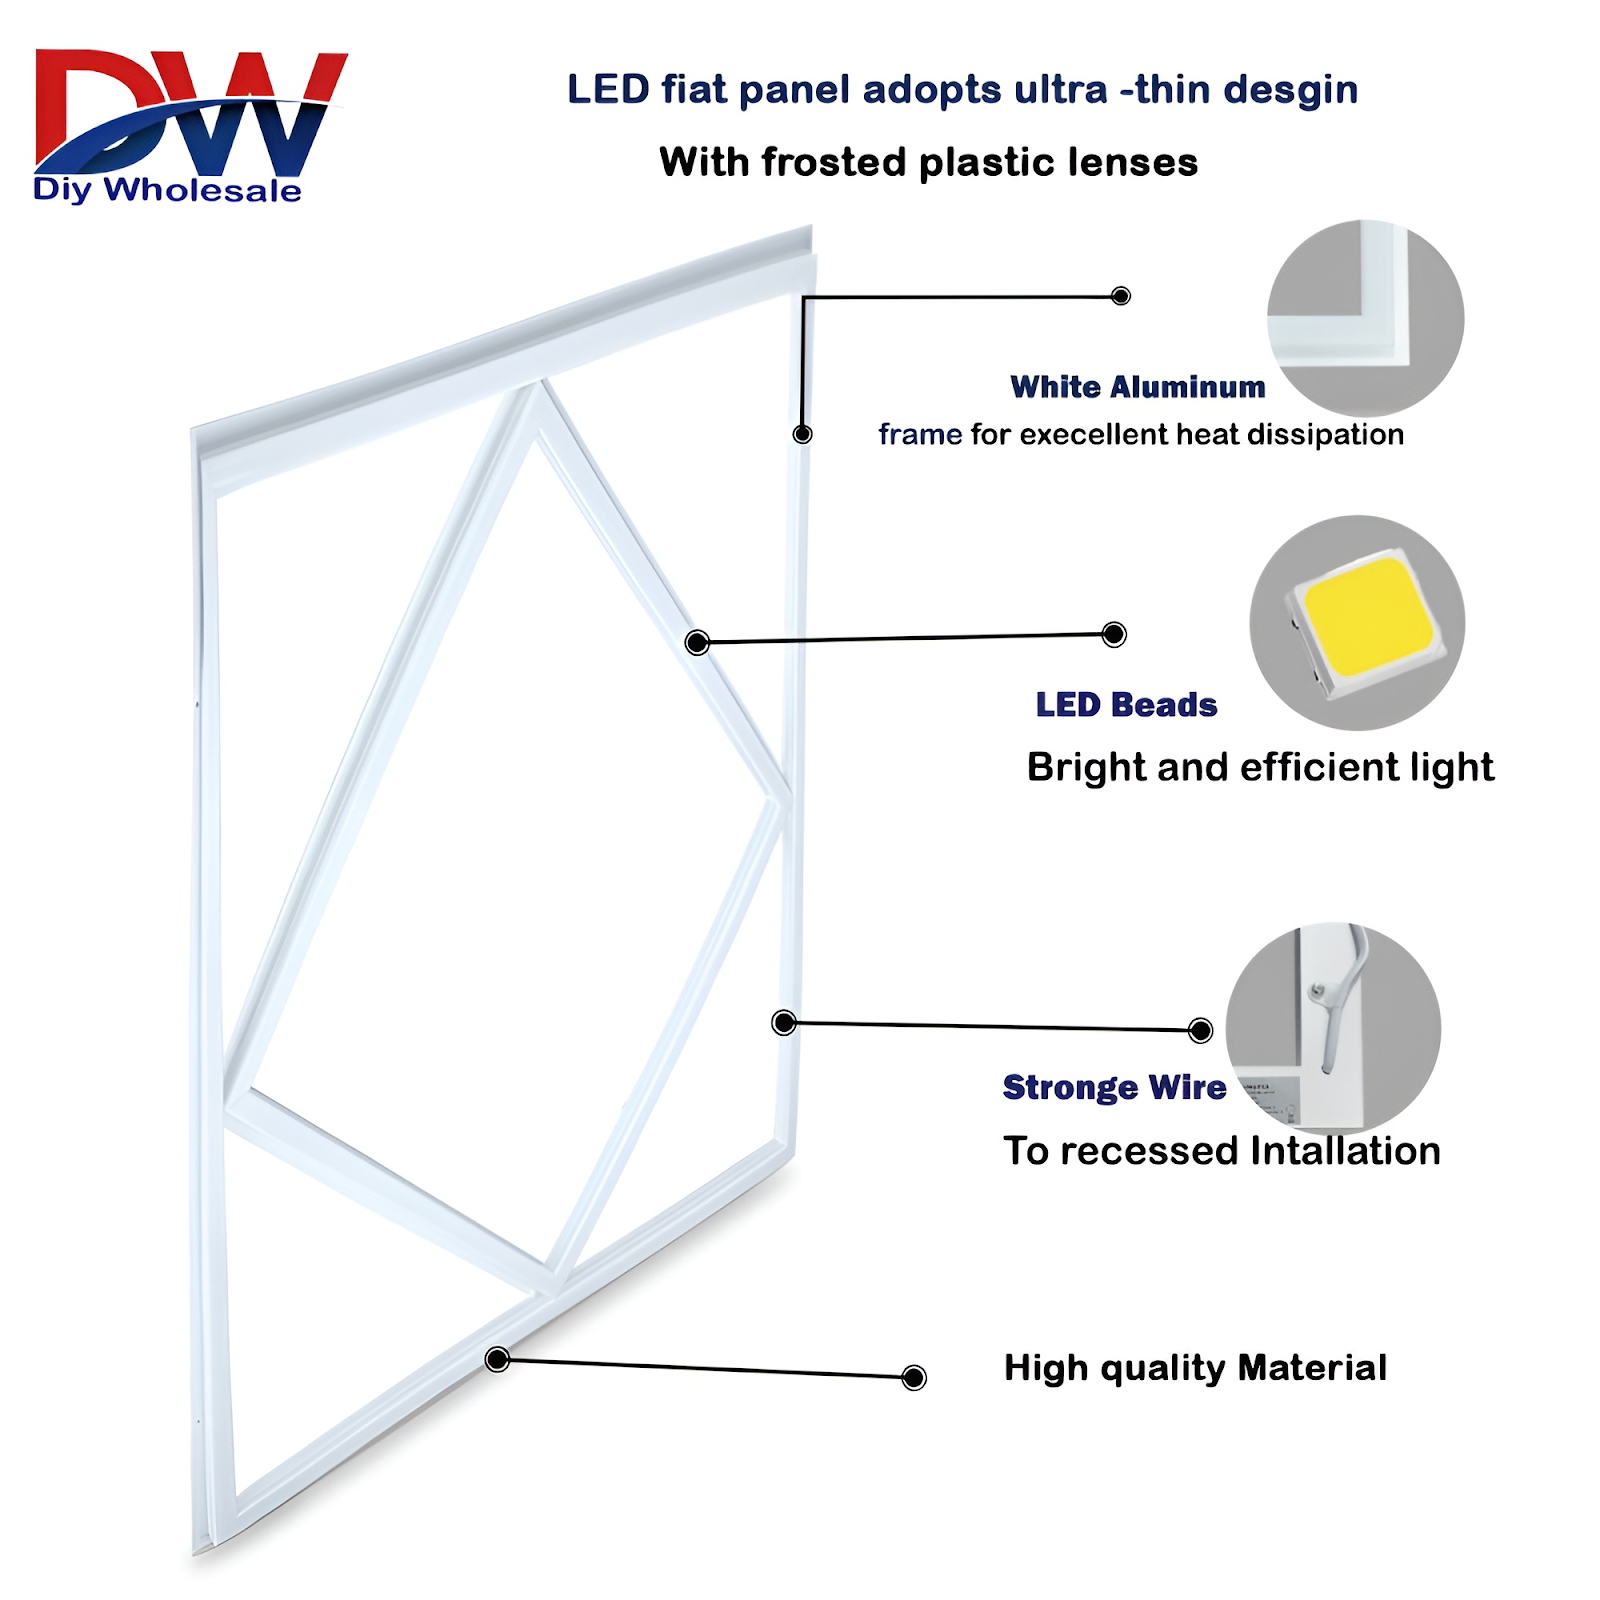 60W LED Panel Light